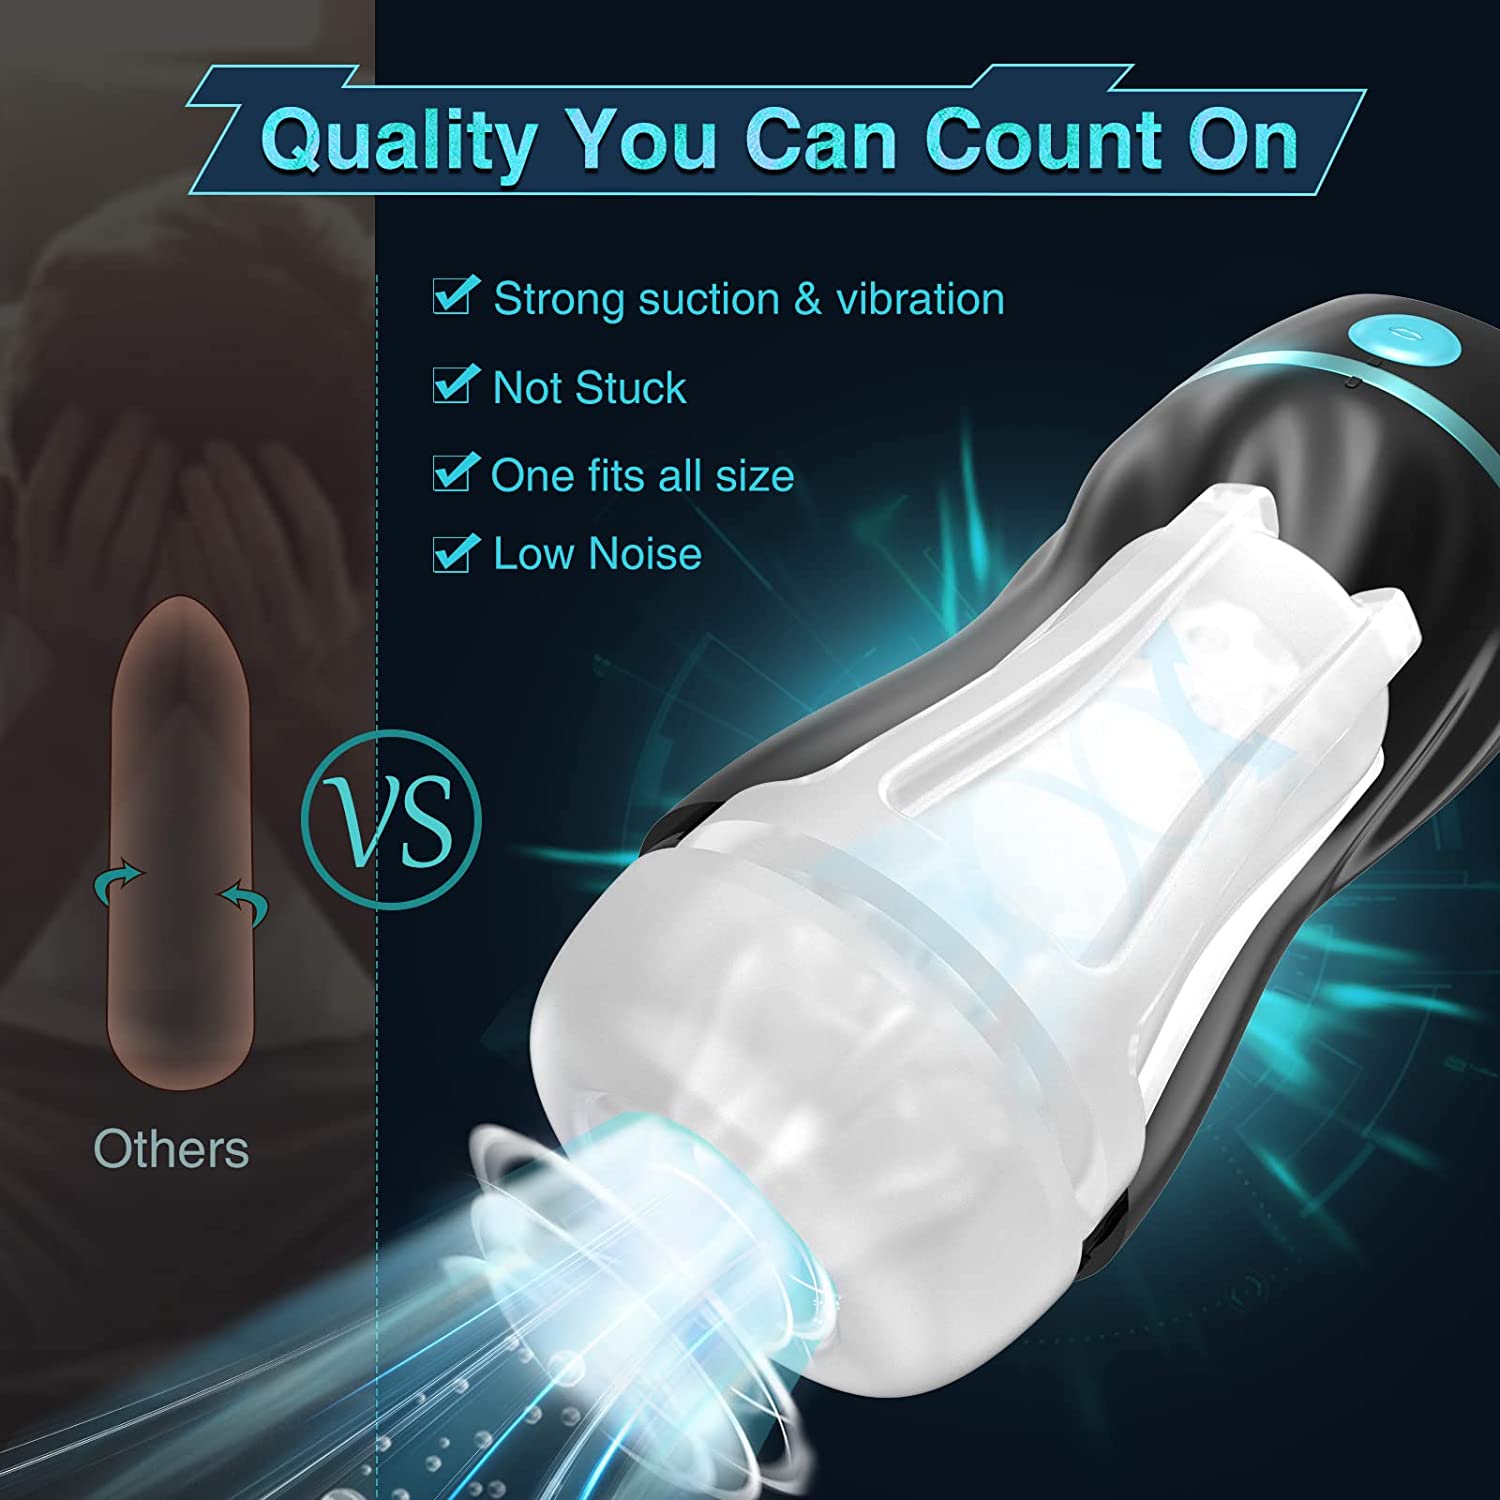 Upgraded 7 Vibration & Suction Modes Automatic Male Masturbators